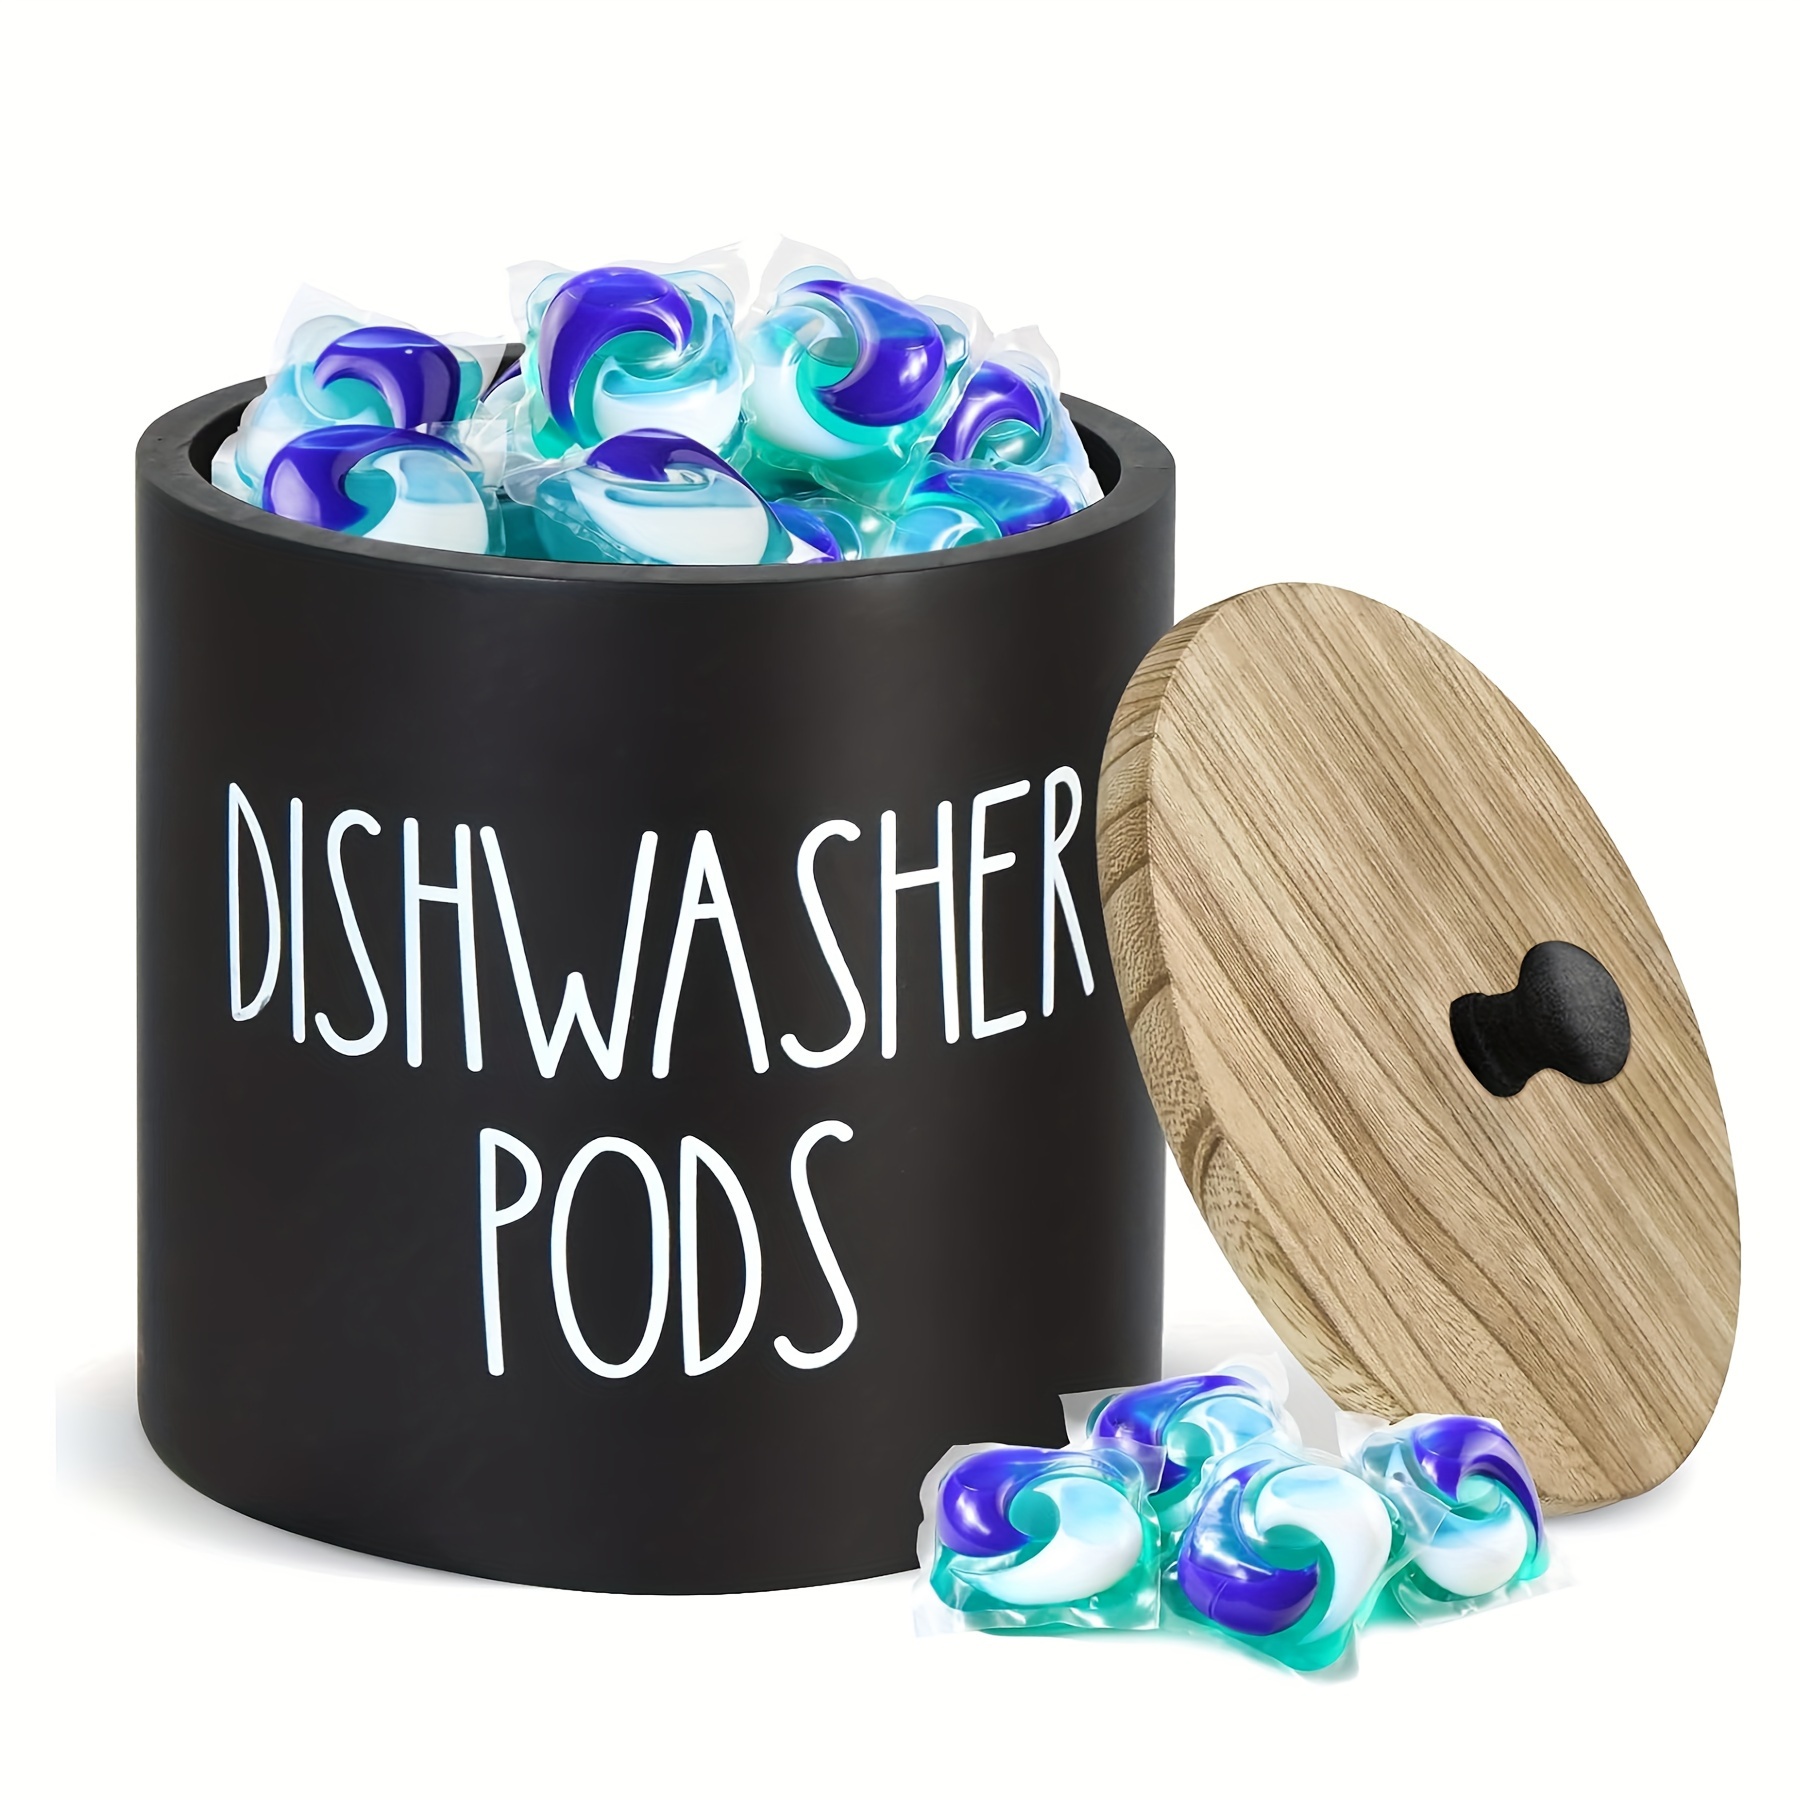 Detergent Dishwasher Pods Glass Jar with 30 Pods